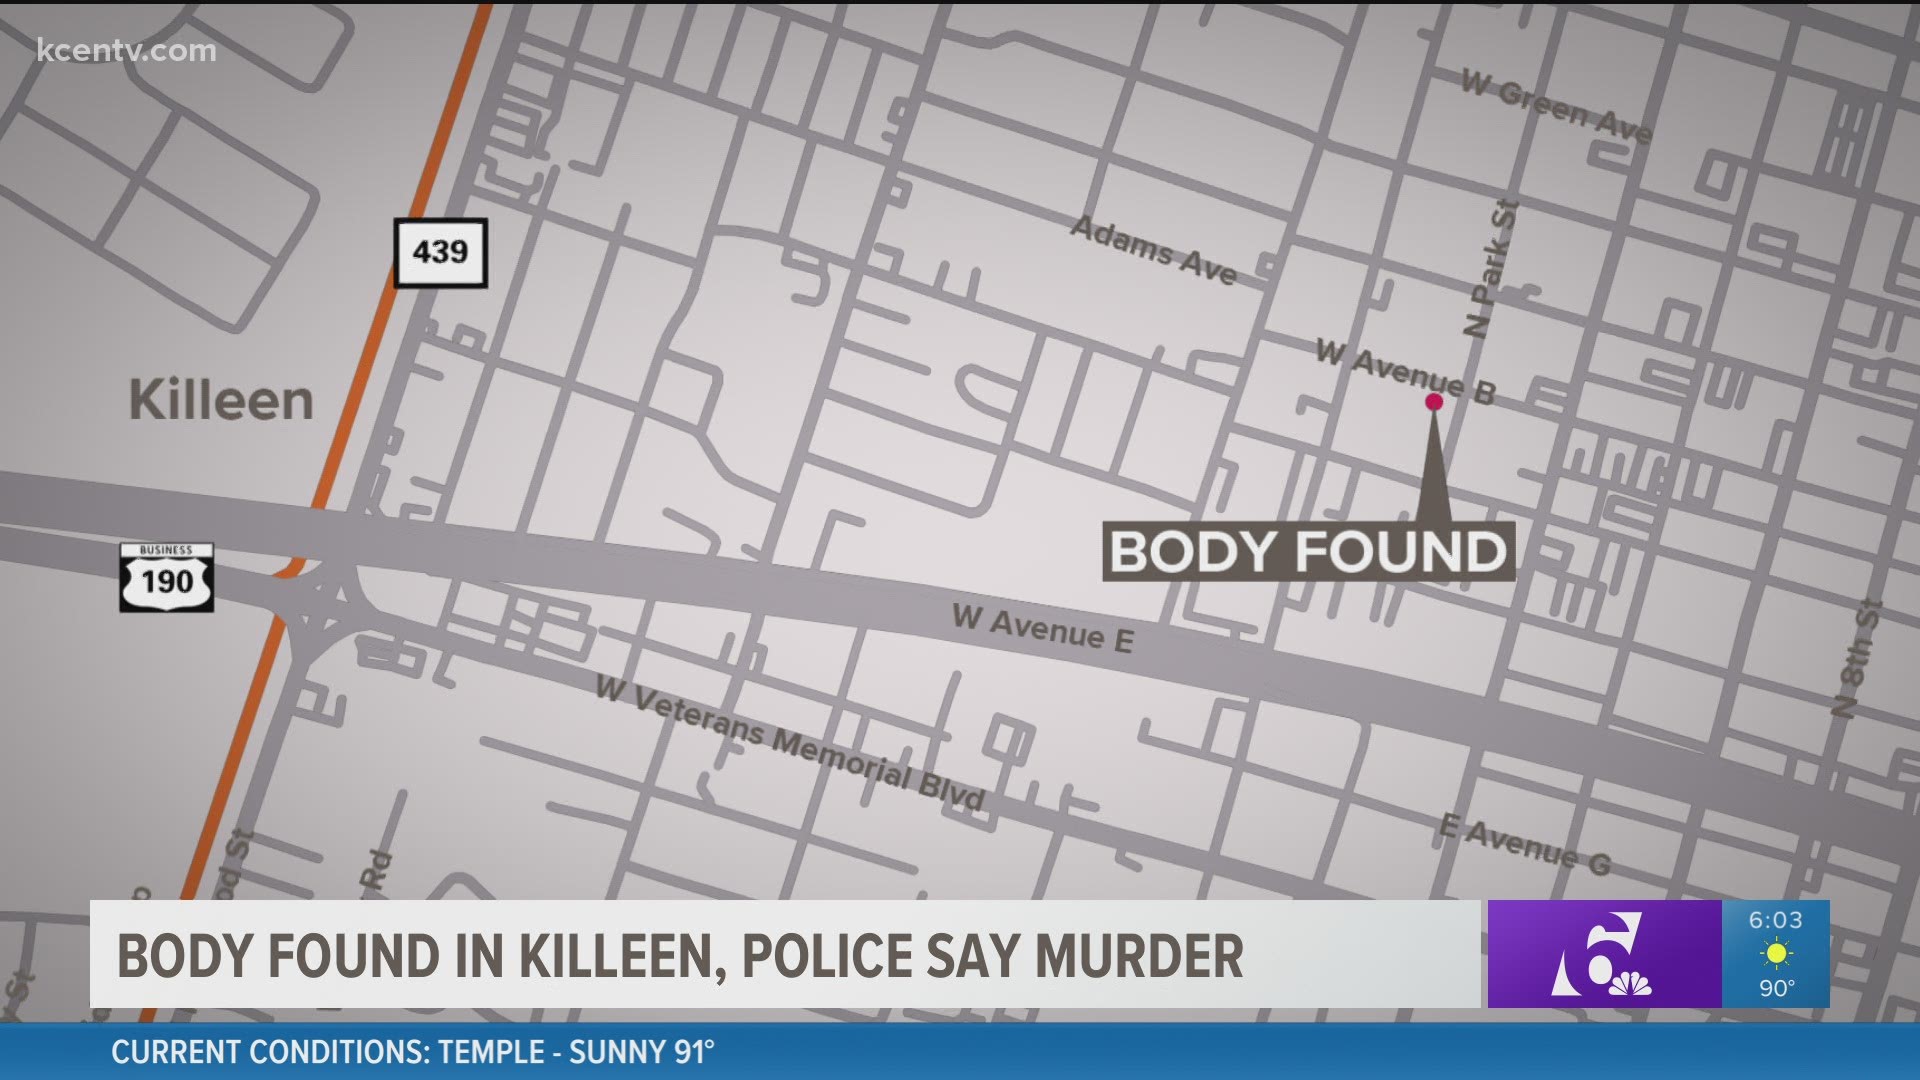 Darryl Glen Williams, 60, was pronounced dead at the scene.